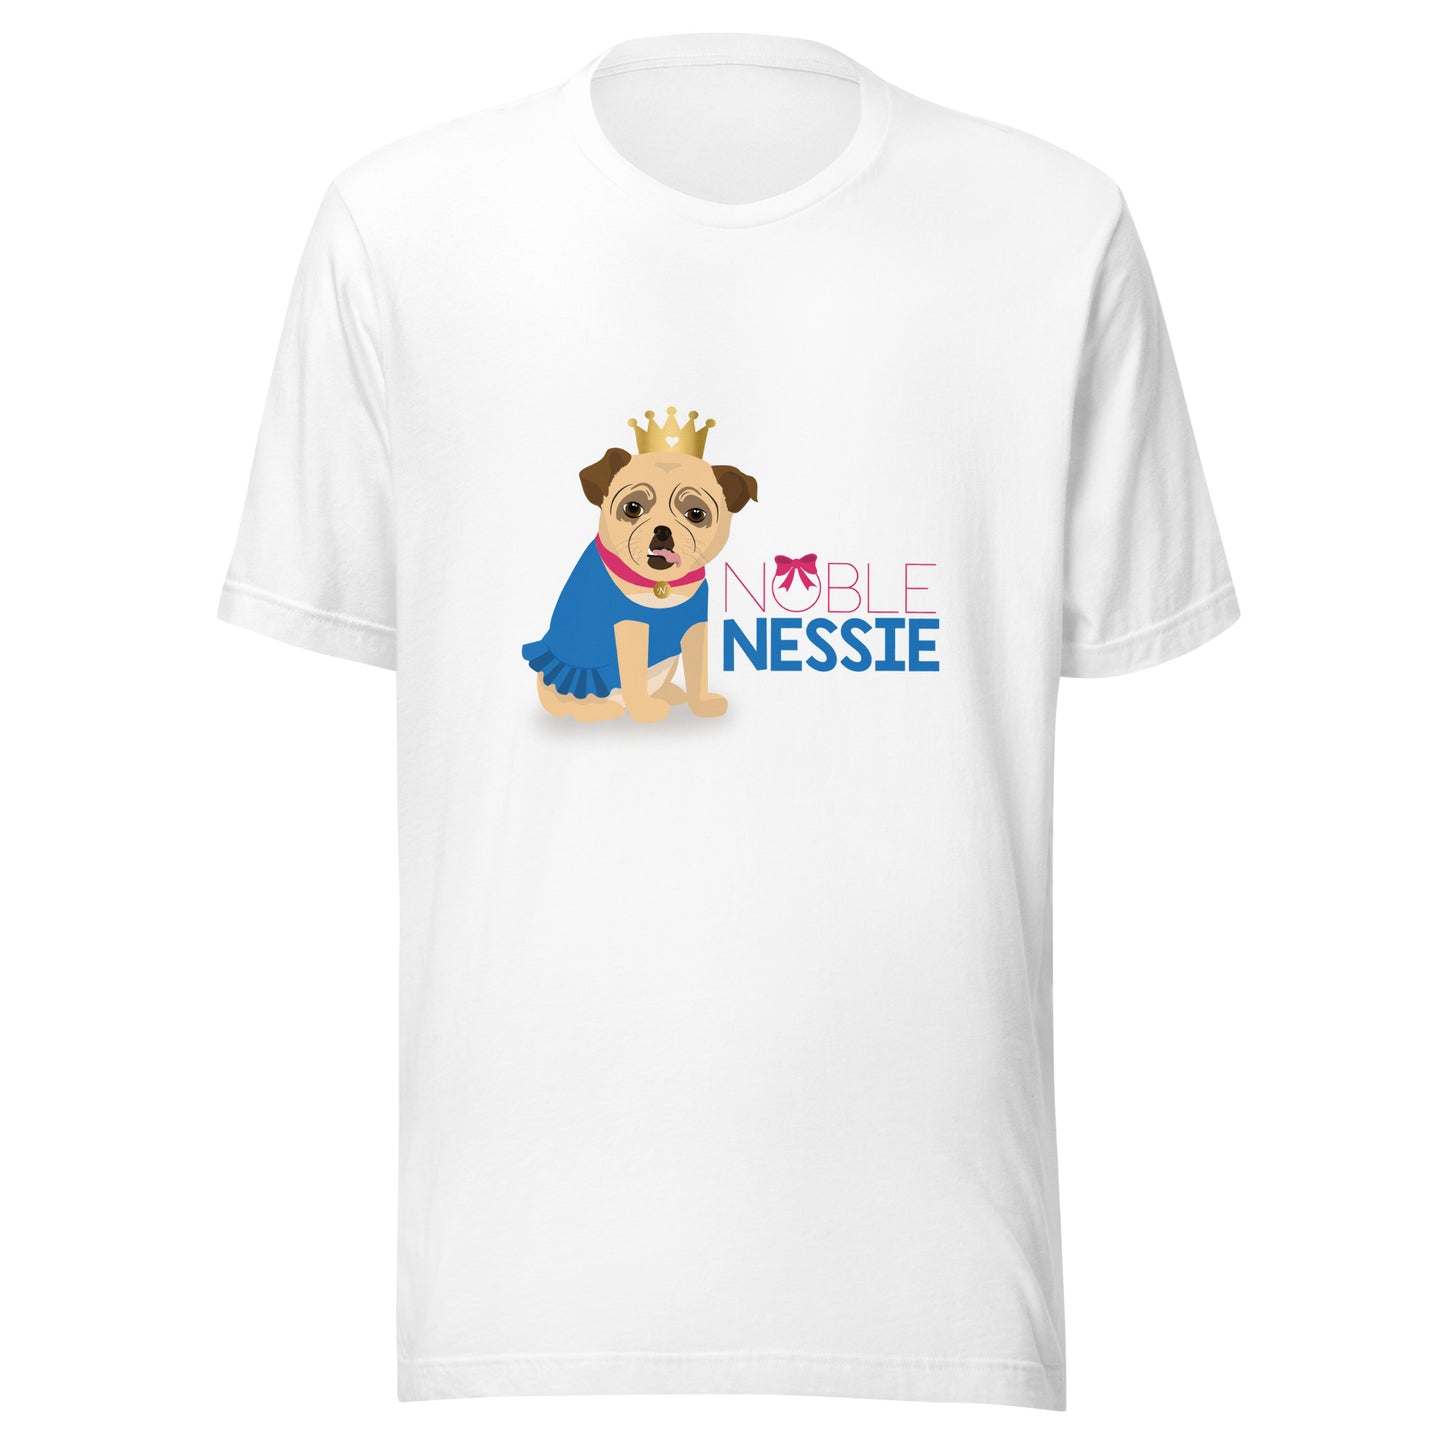 Nessie t-shirt